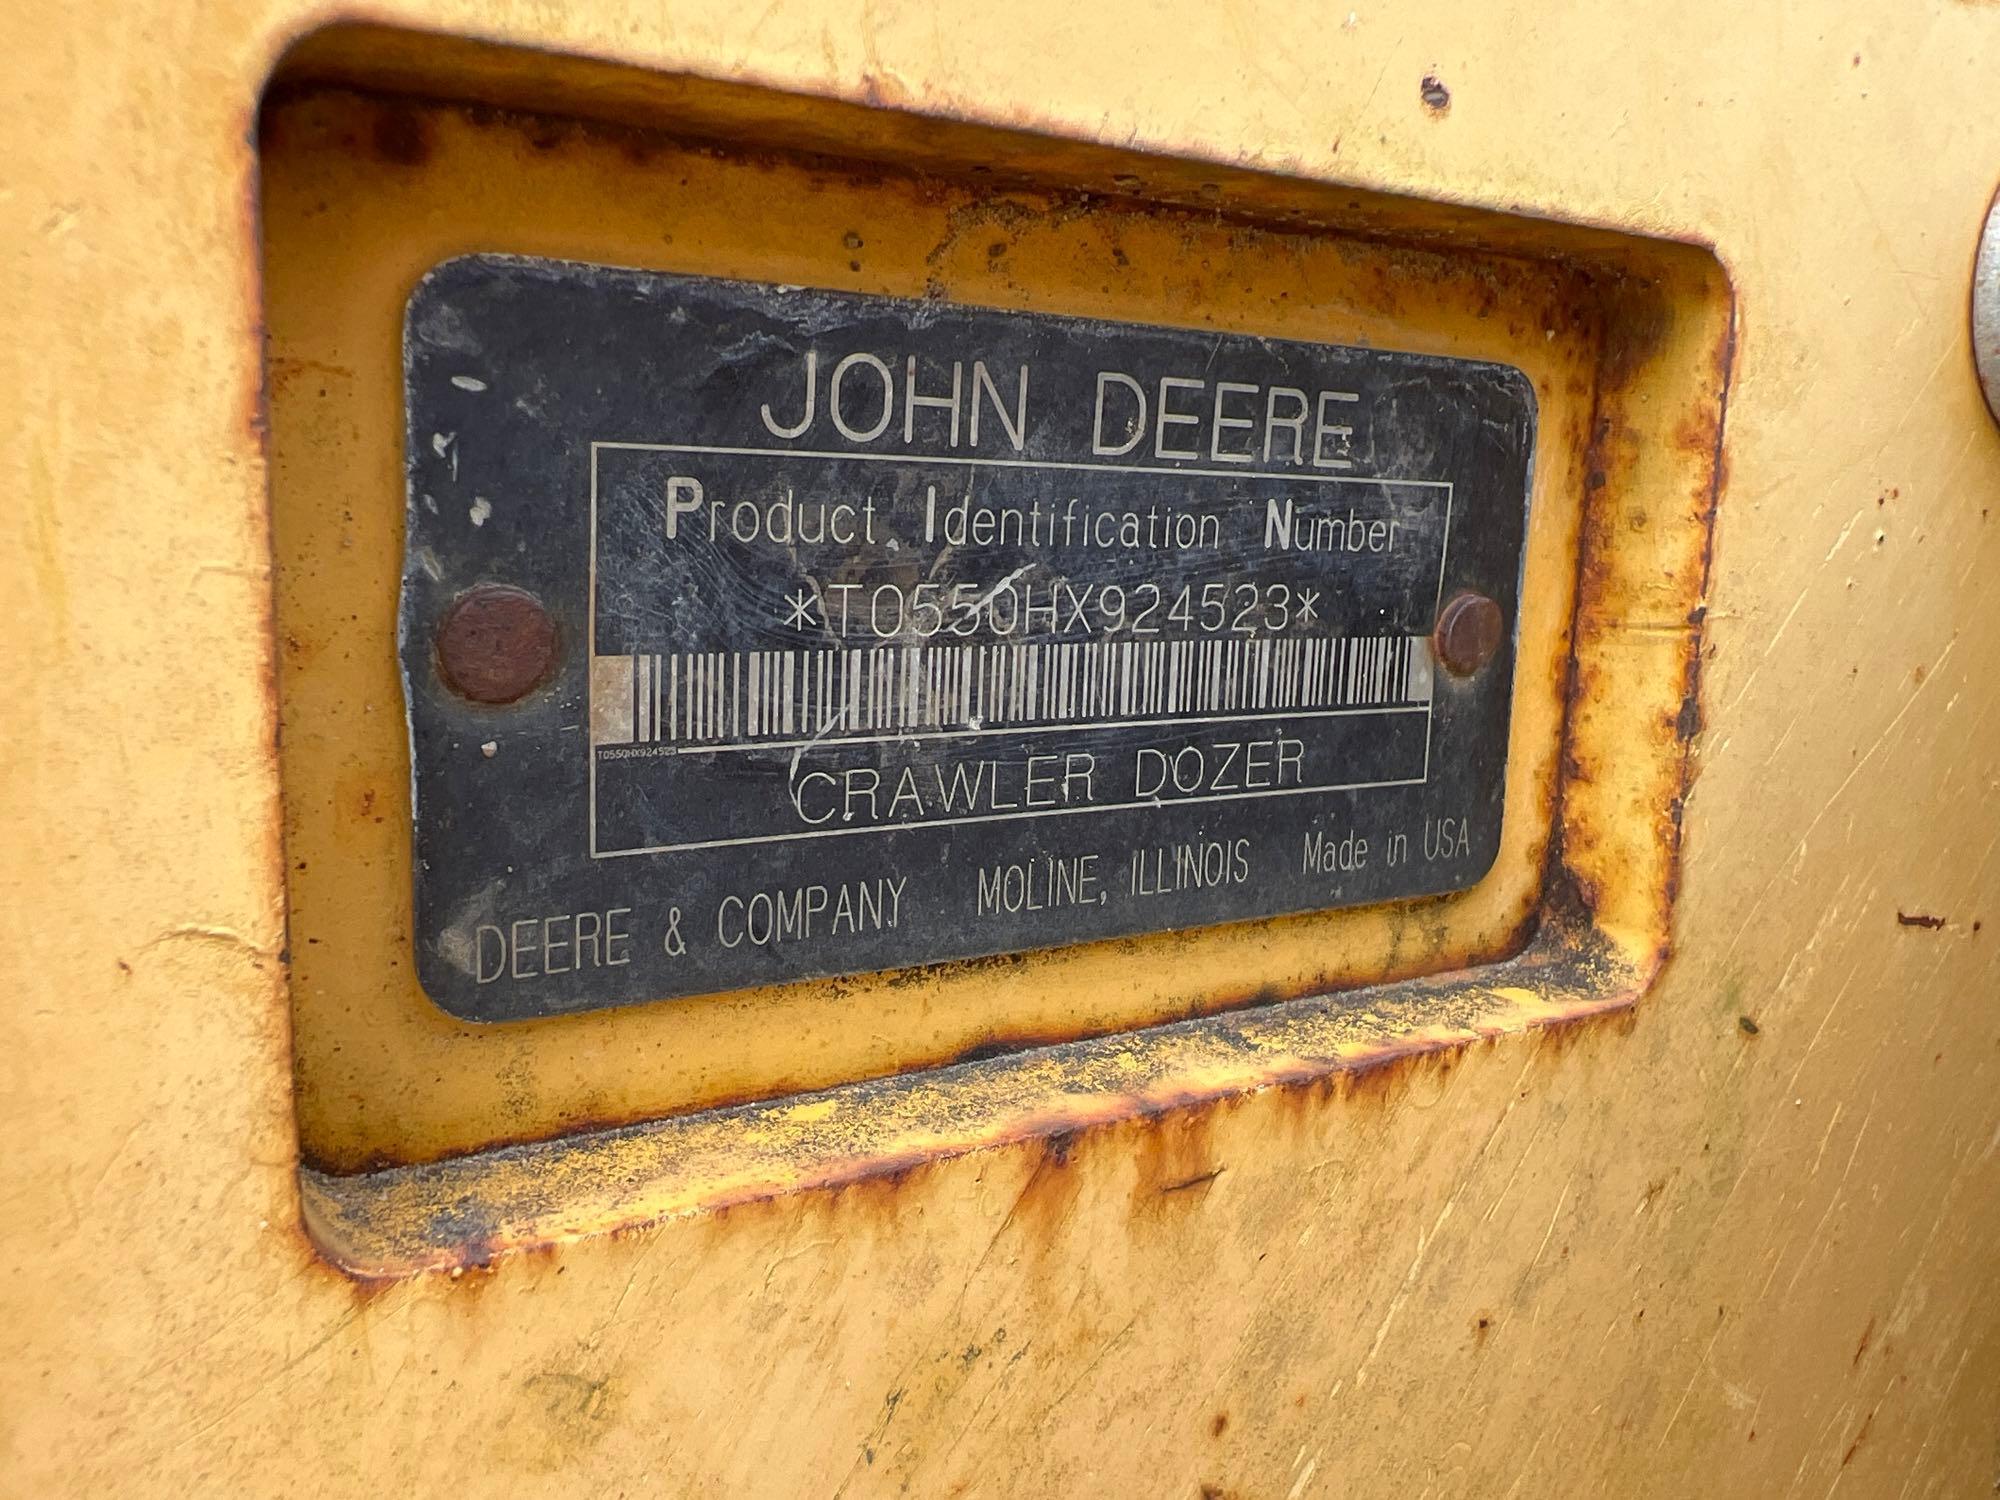 JOHN DEERE 550HLT CRAWLER TRACTOR SN:X924523 powered by John Deere diesel engine, equipped with